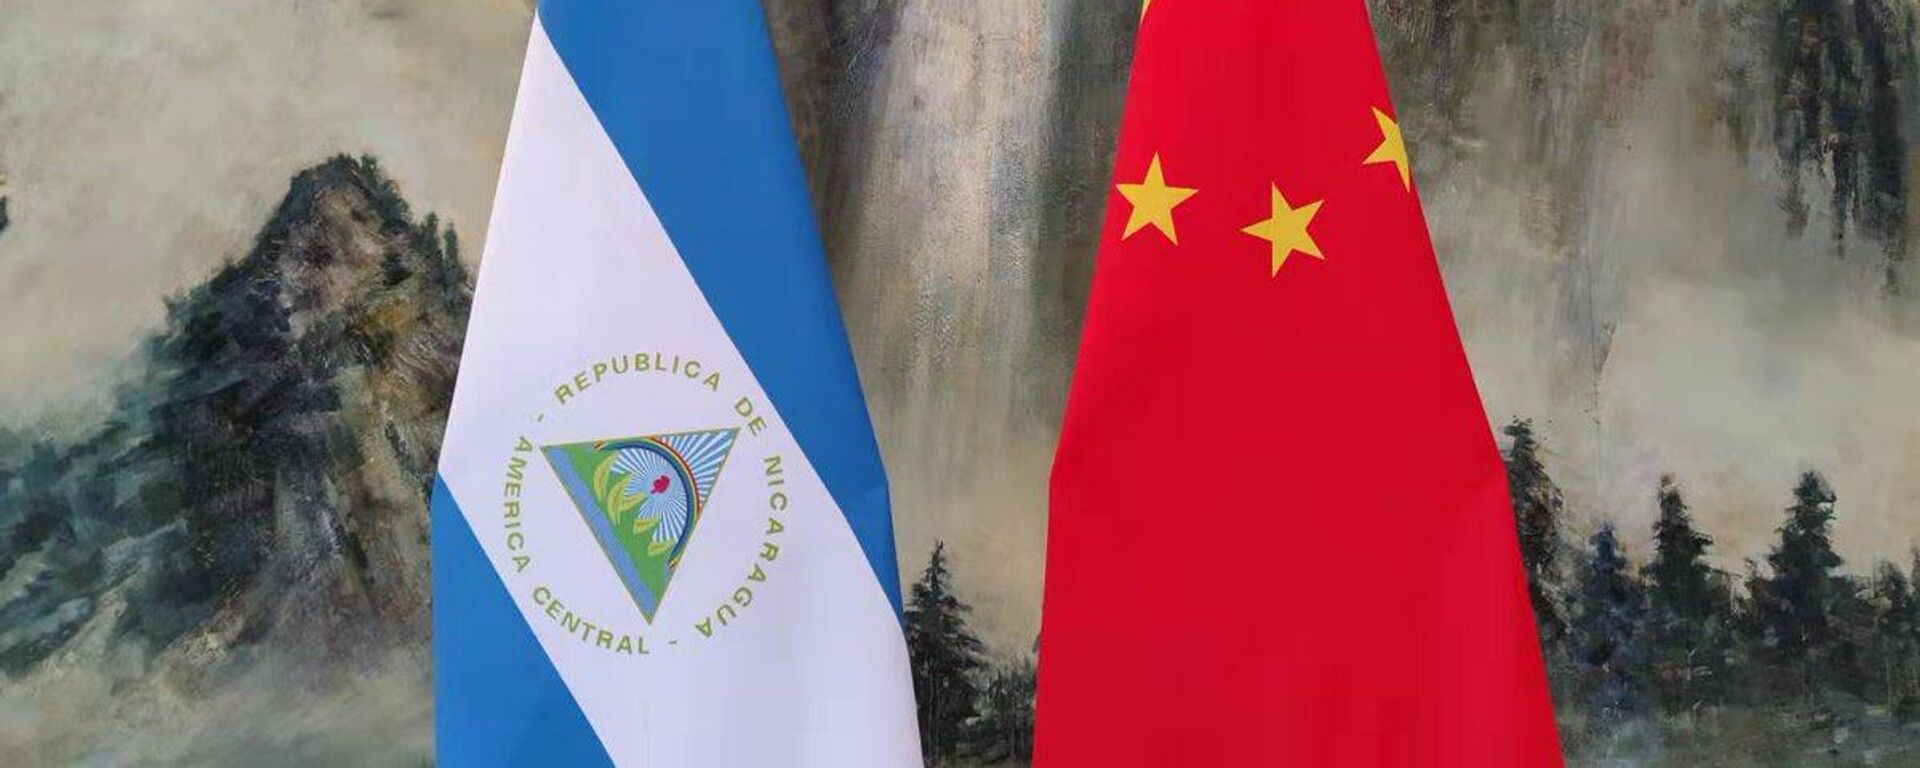 Banderas de Nicaragua y China - Sputnik Mundo, 1920, 13.12.2021